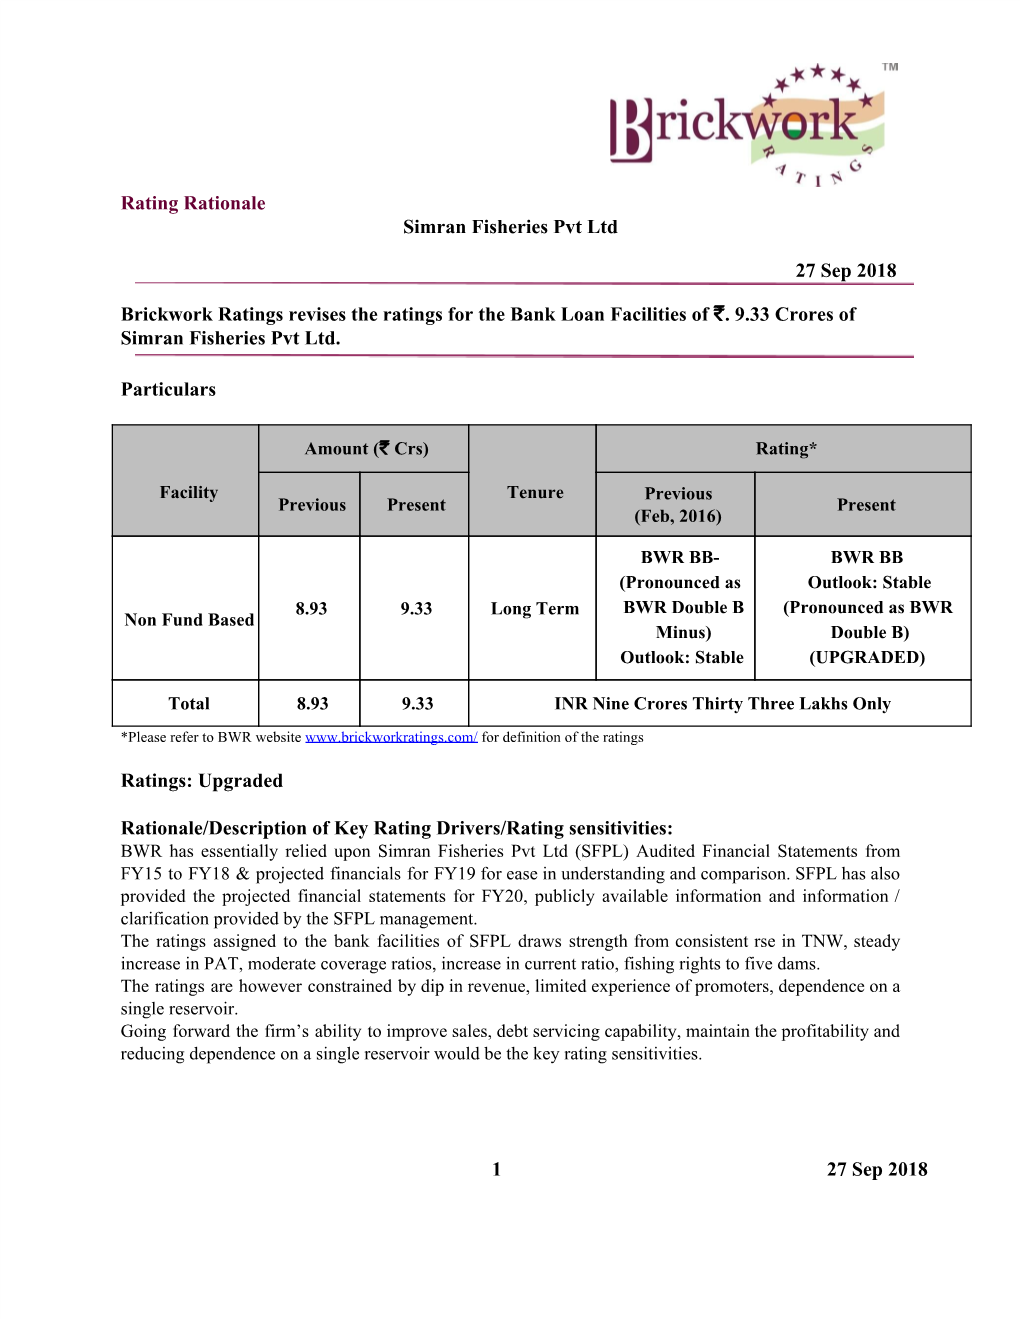 Rating Rationale Simran Fisheries Pvt Ltd 27 Sep 2018 Brickwork Ratings Revises the Ratings for the Bank Loan Facilities of ₹